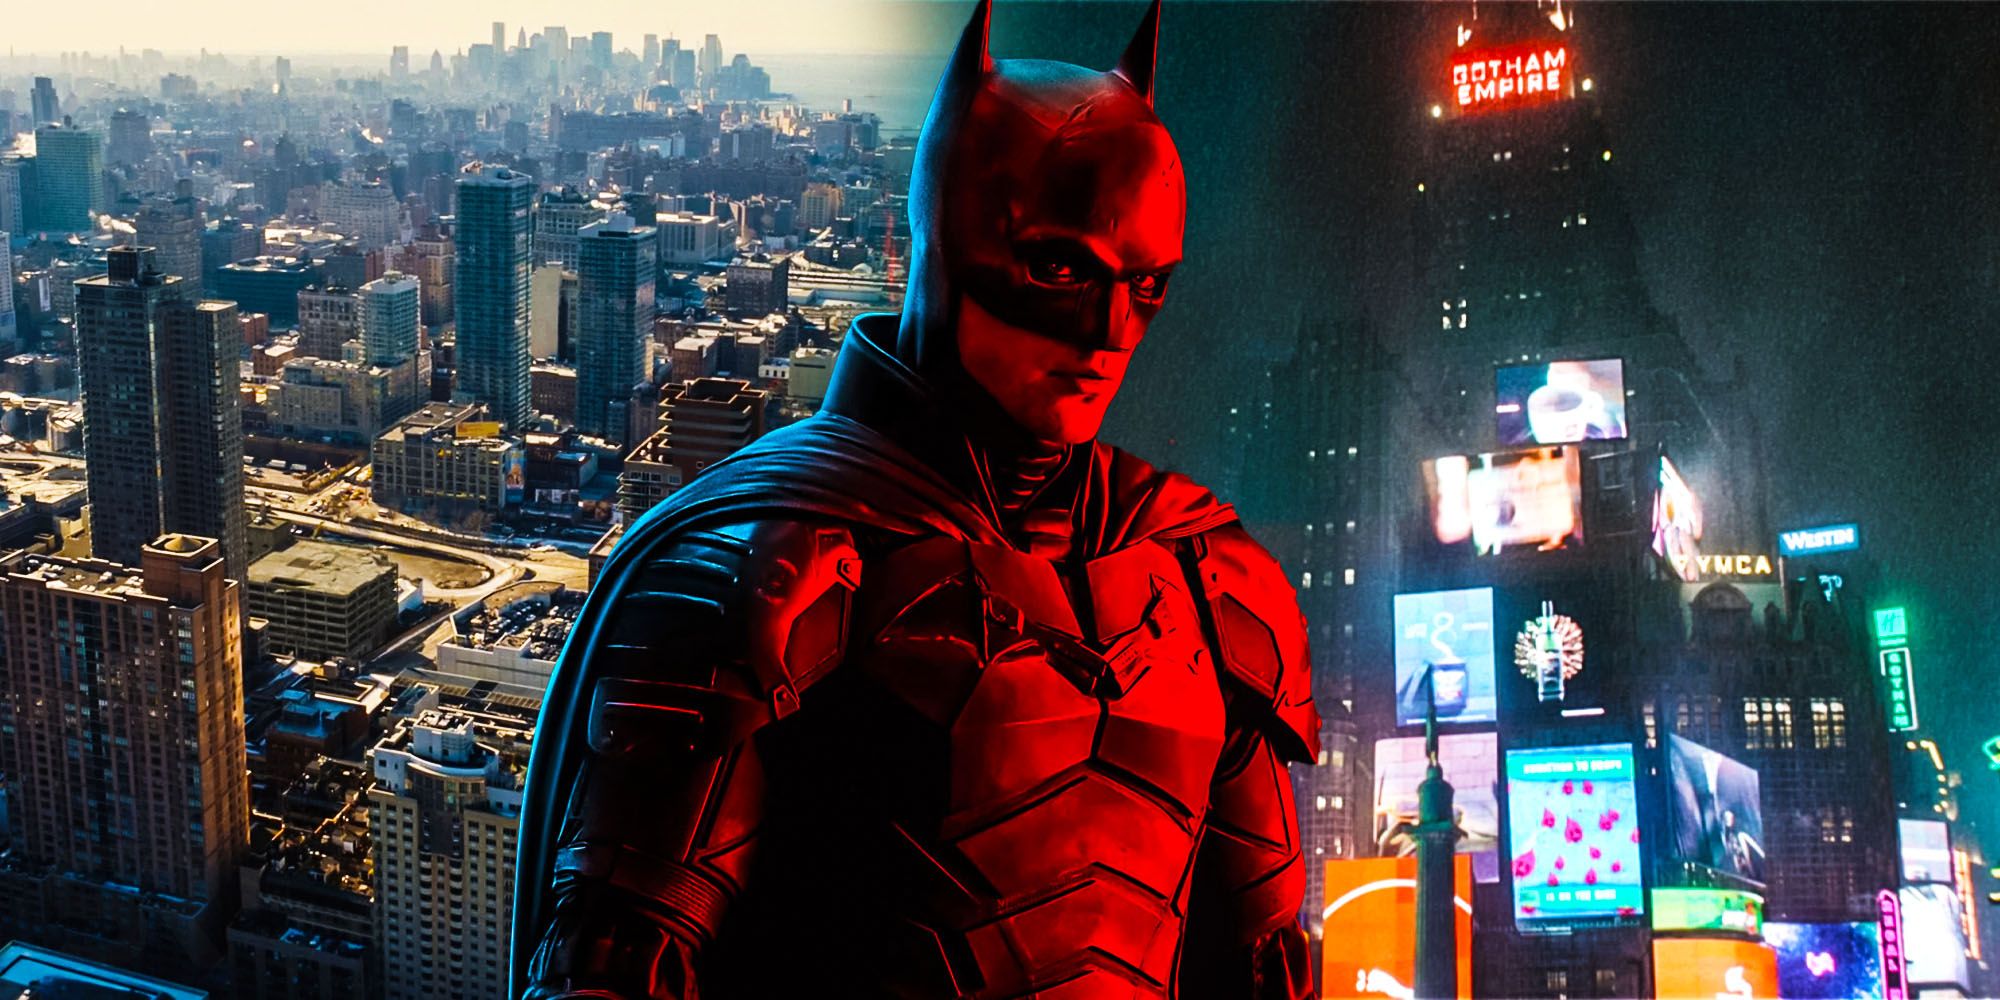 Gotham The batman The dark knight